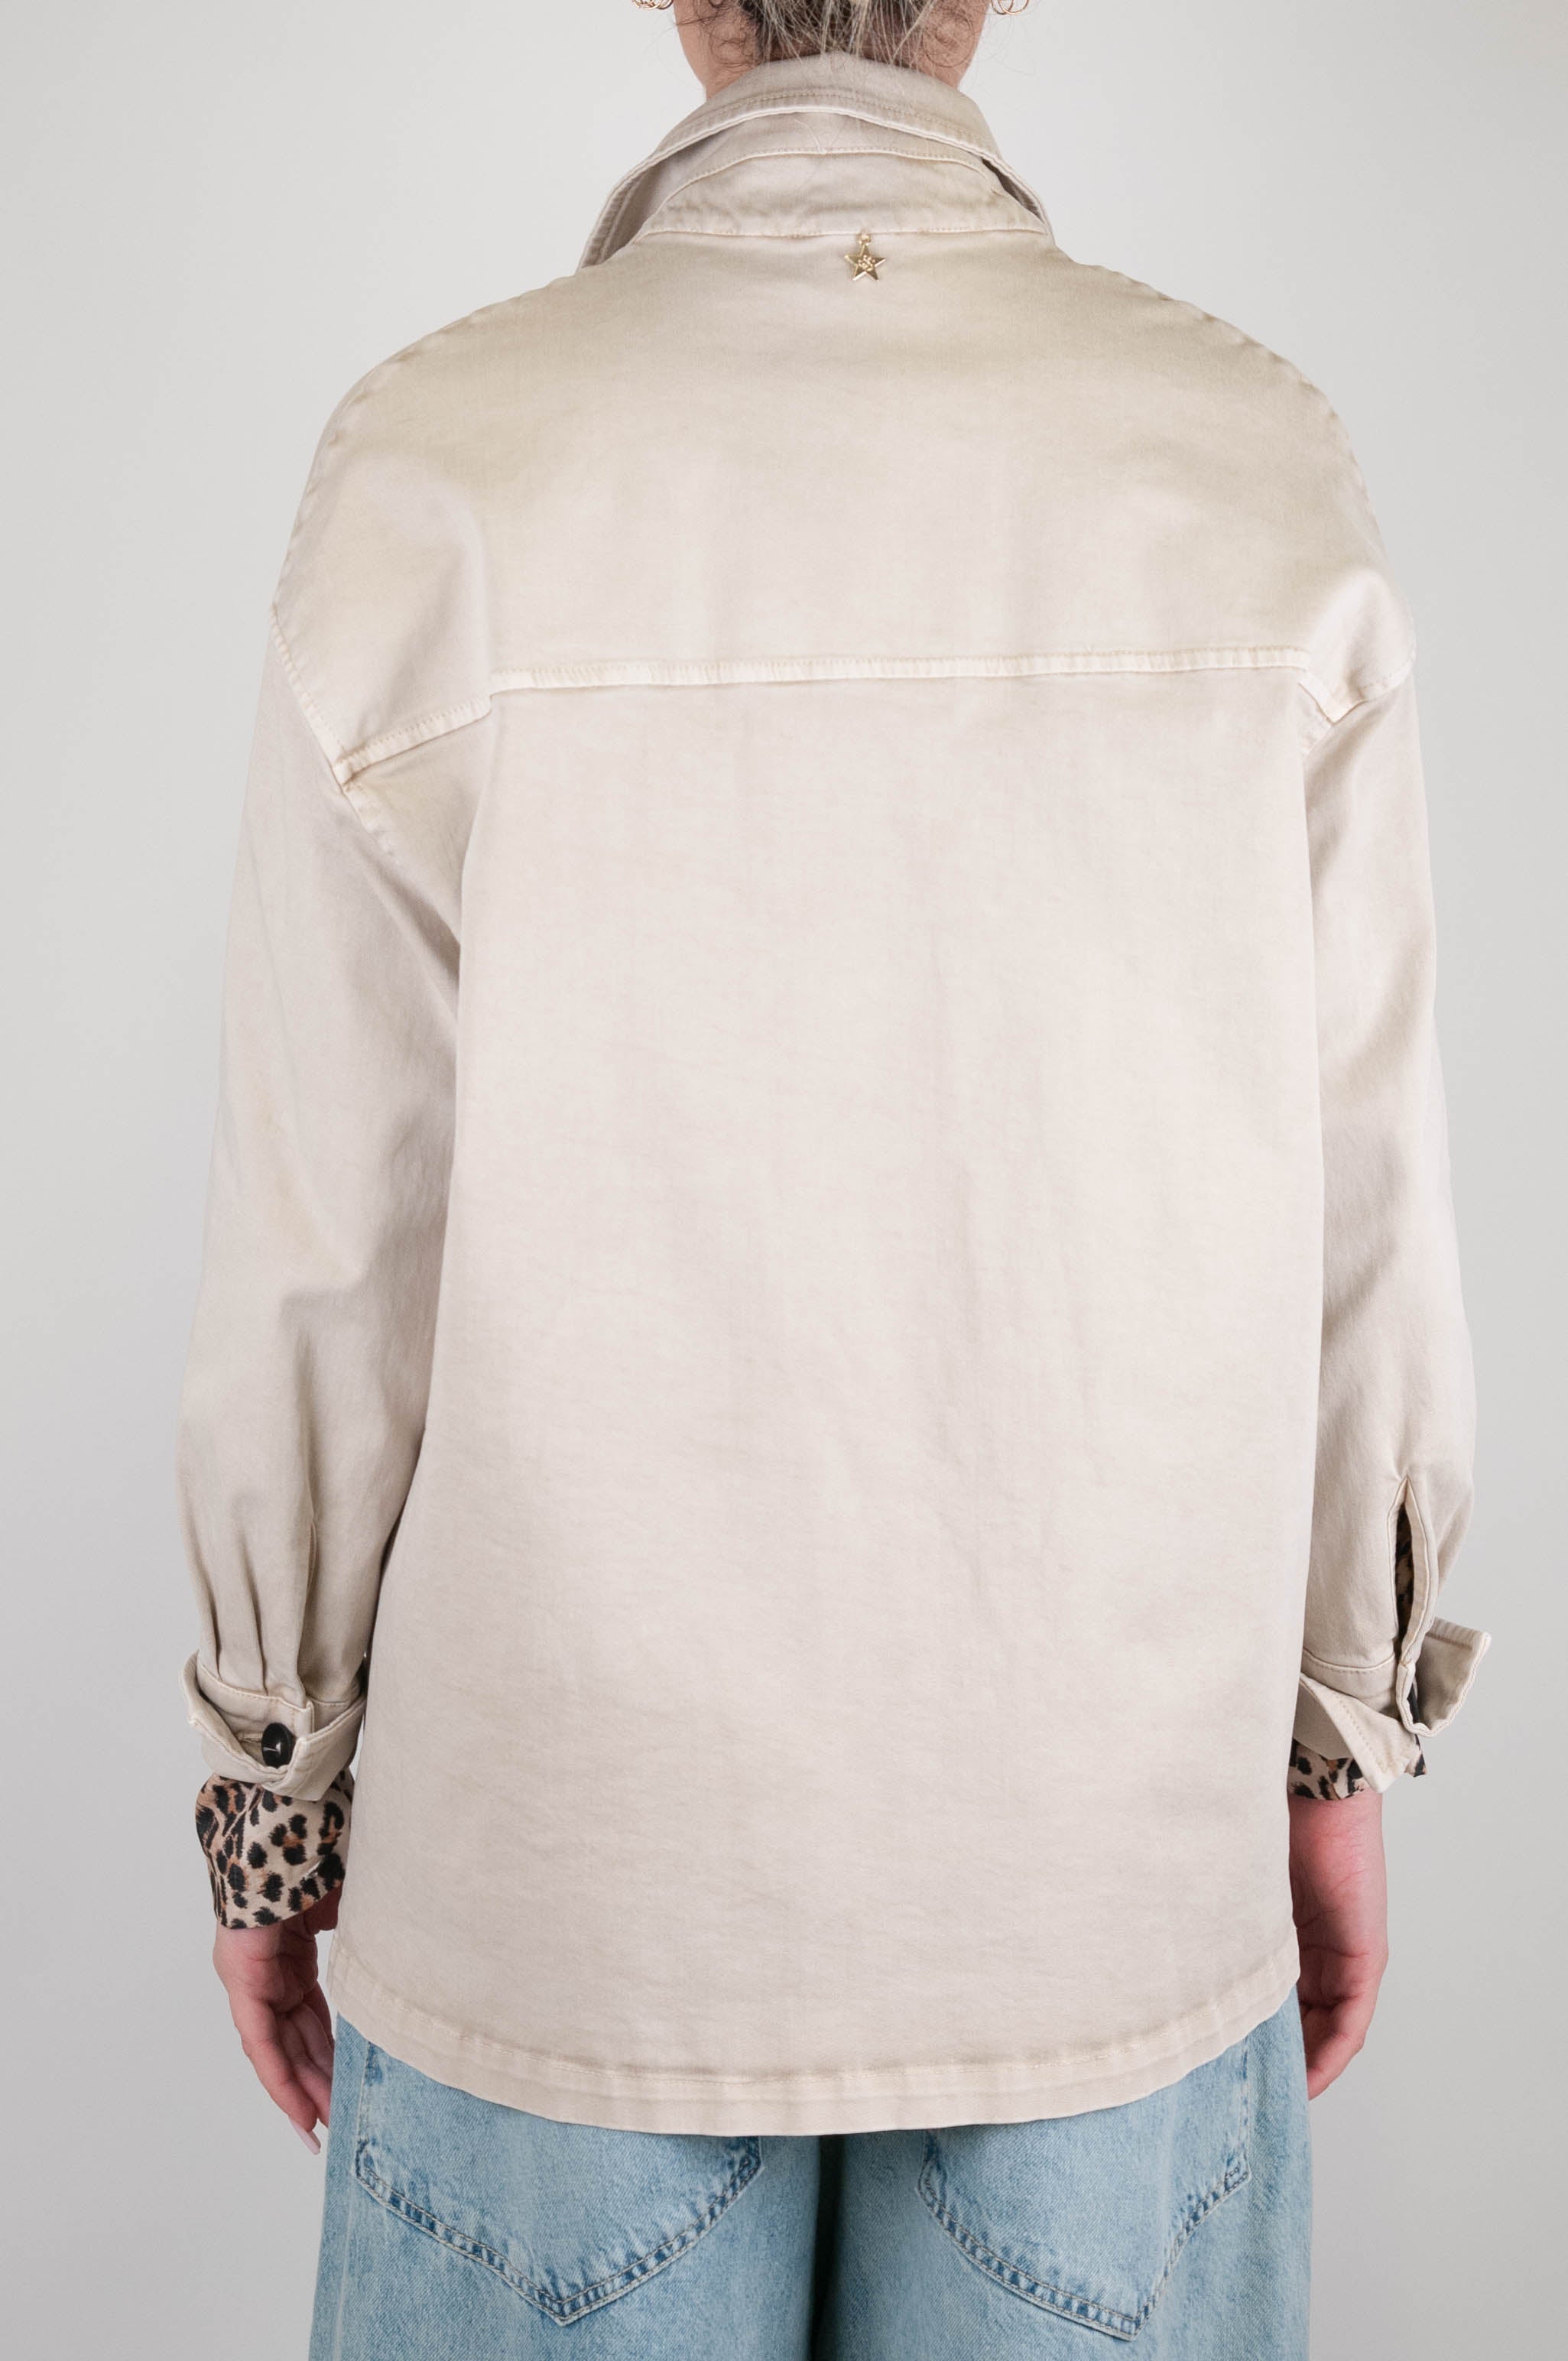 Souvenir - Saharan jacket with four front pockets